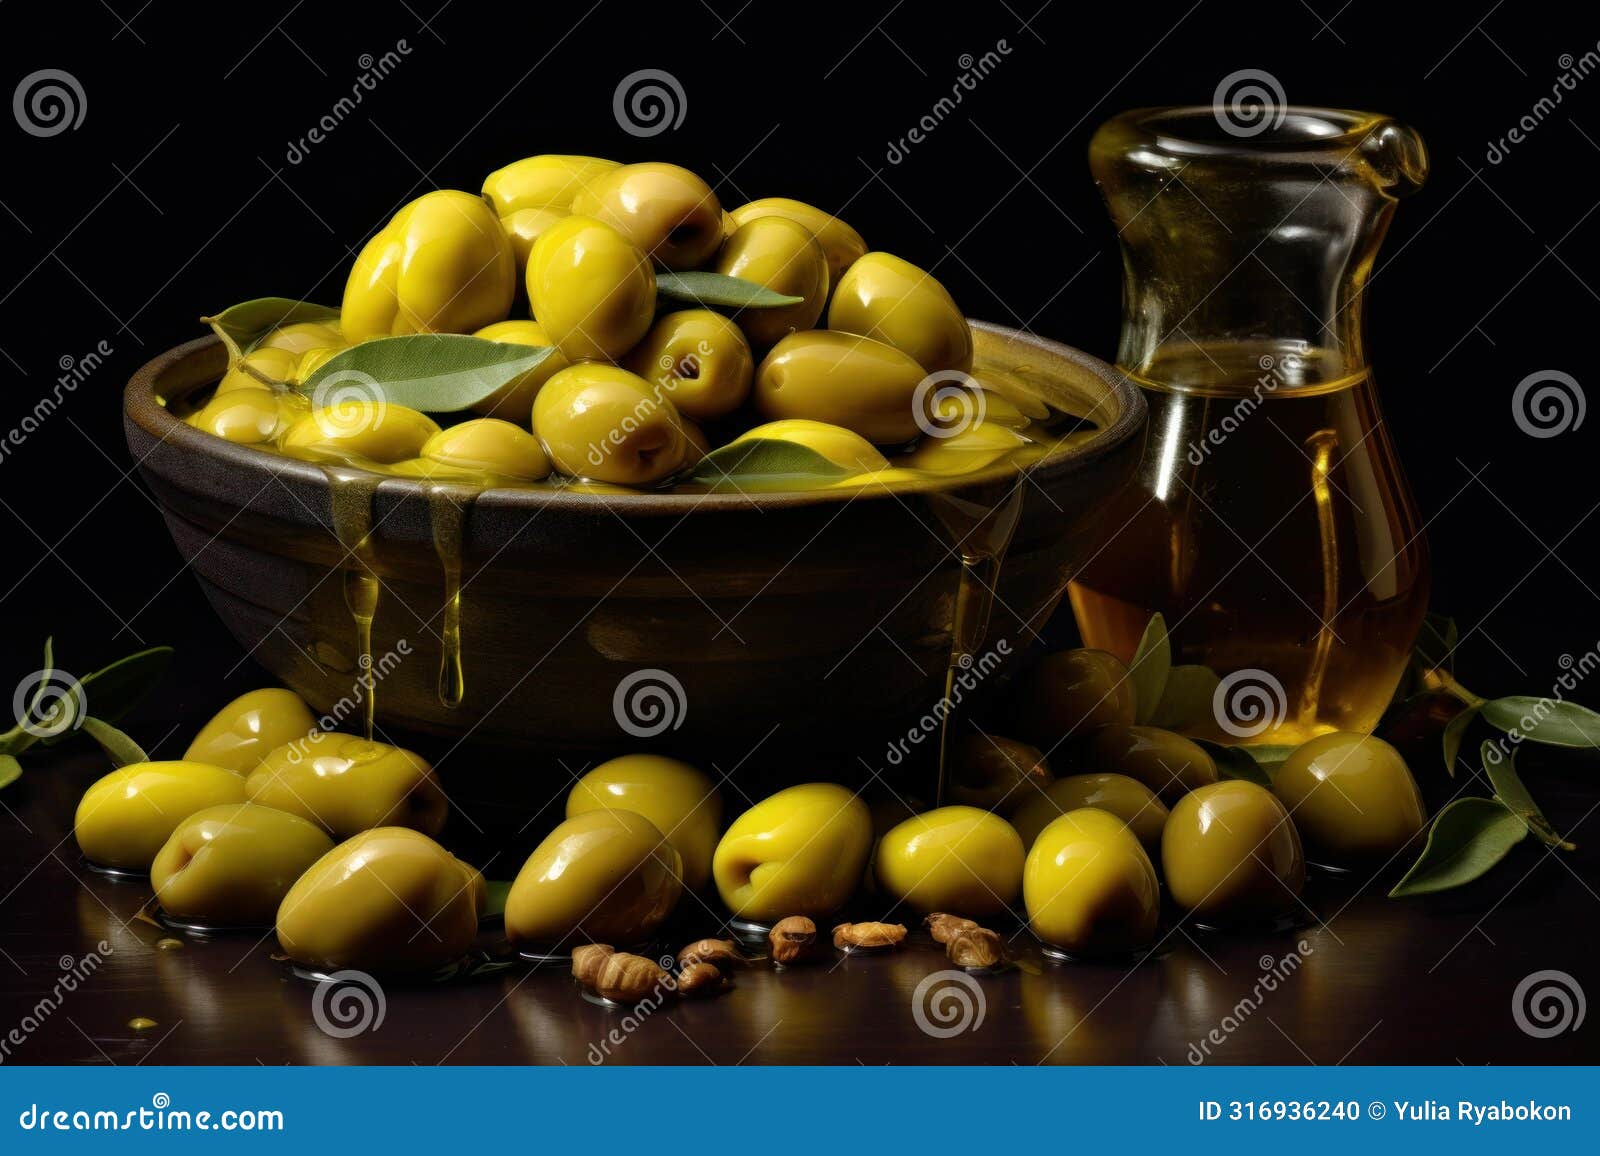 versatile olive oil bottle virgin. generate ai